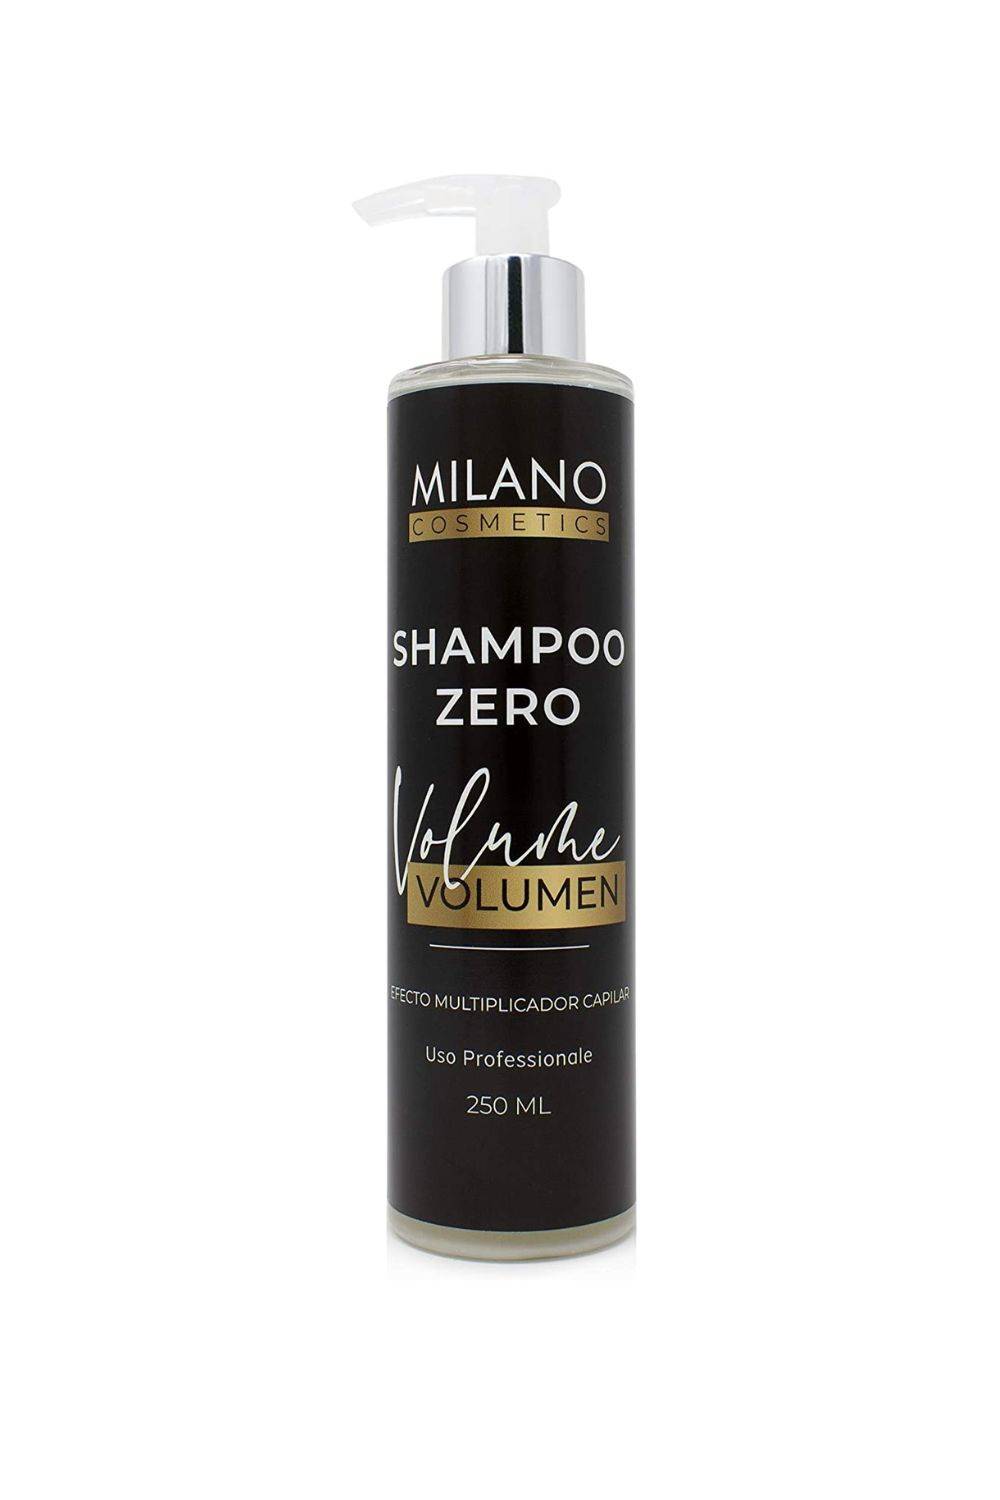 Milano Champú Zero Volumen 250 ml Sin sulfatos ni parabenos ni siliconas ni sales ni cera, profesional para pelo fino con efecto relleno natural, incrementando espesor. Hidratante, sensitive cero.